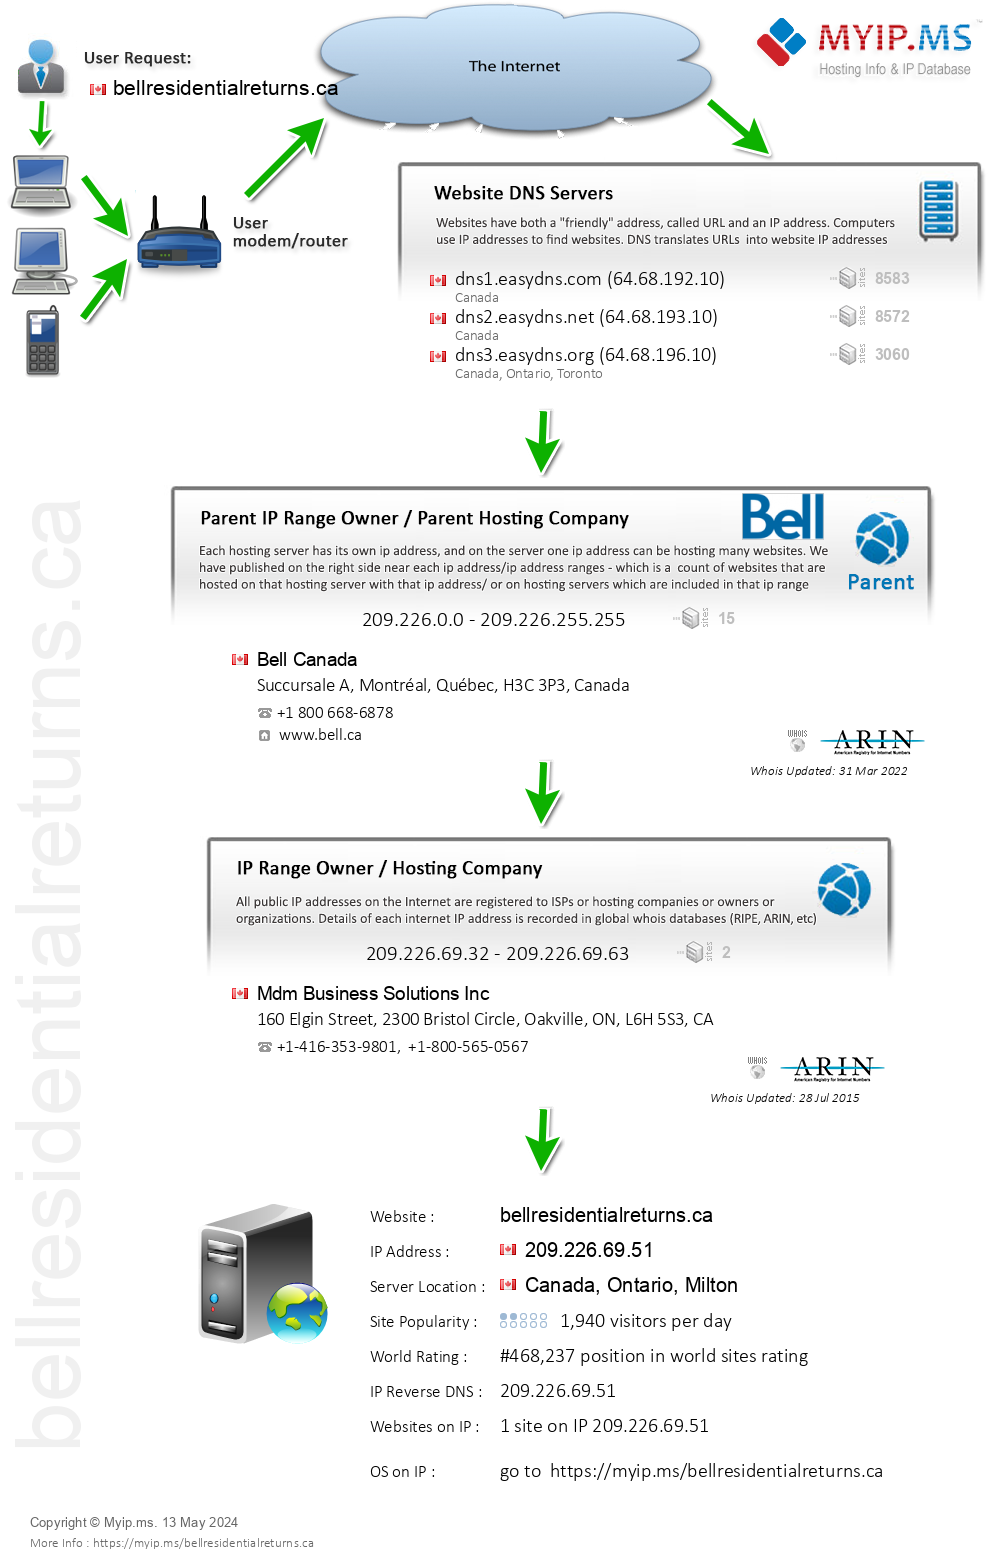 Bellresidentialreturns.ca - Website Hosting Visual IP Diagram